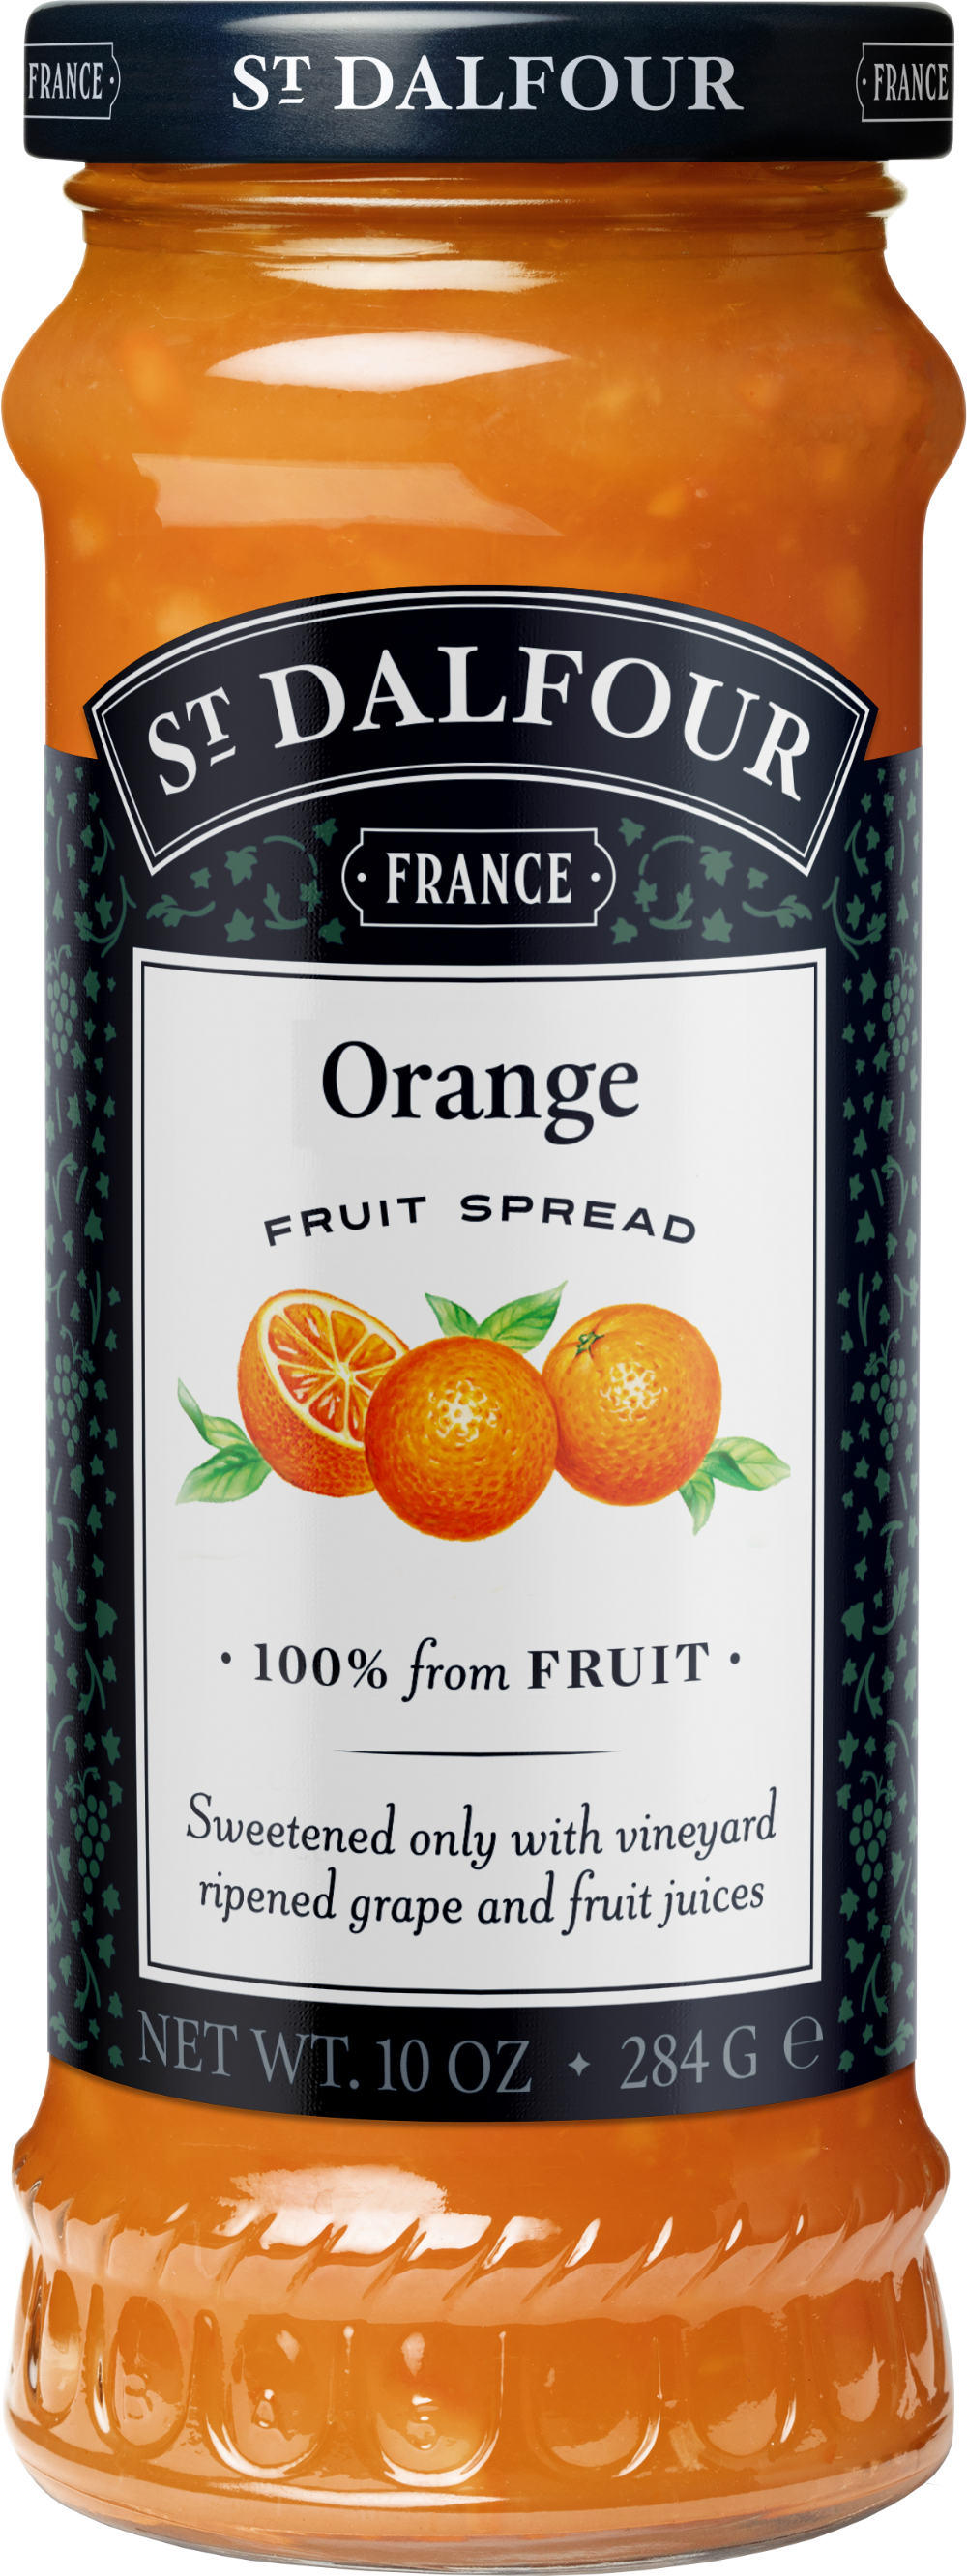 ST DALFOUR Orange Fruit Spread 284g